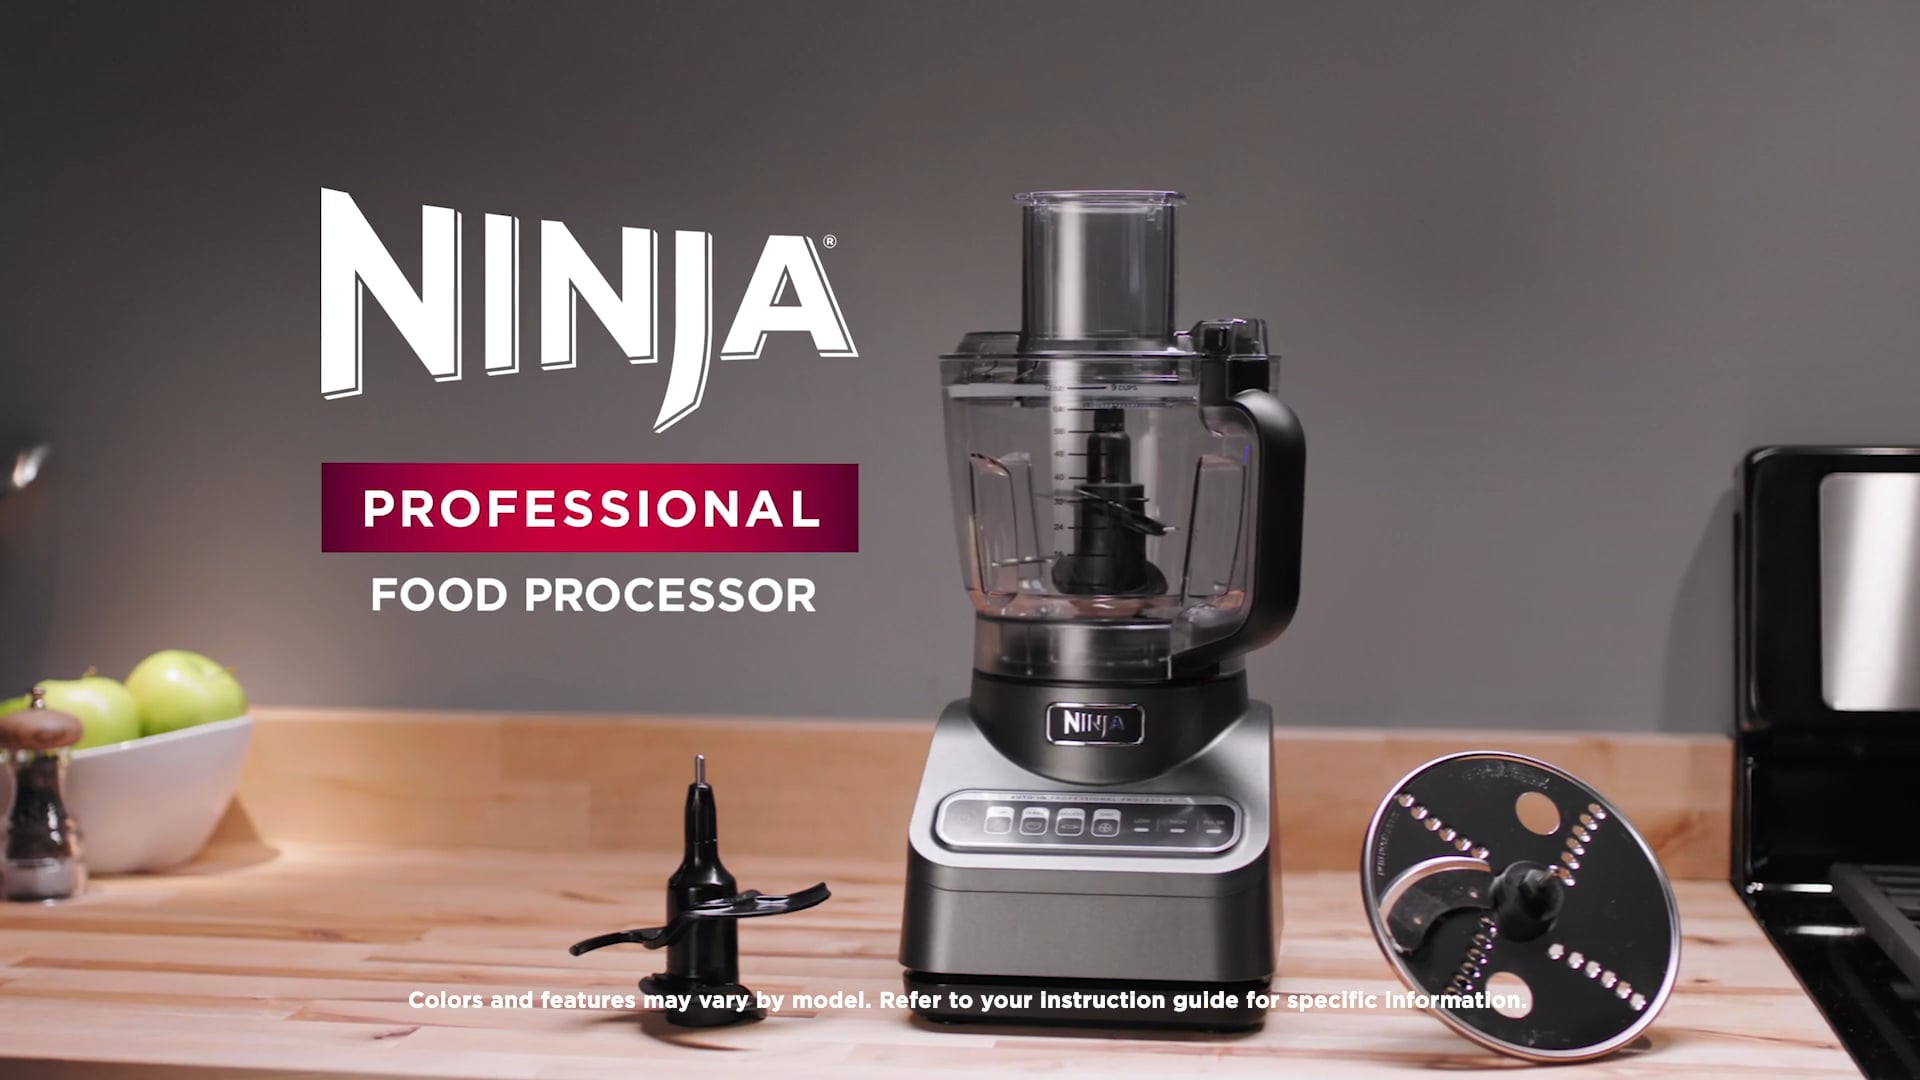 Ninja_Professional Food Processor